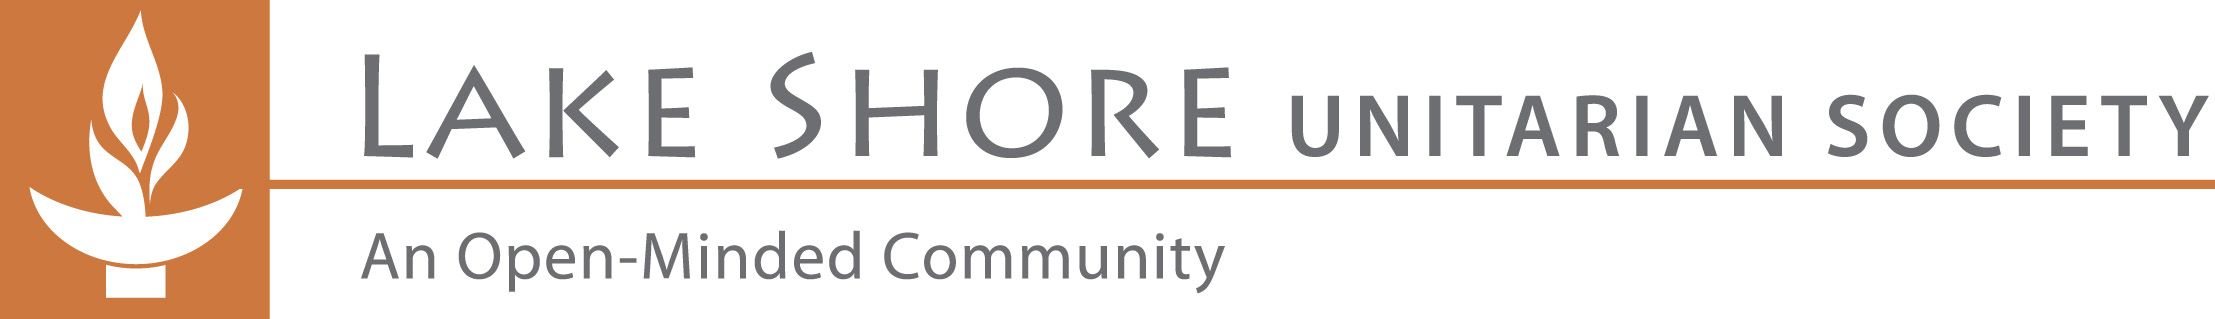 Lake Shore Unitarian Society logo